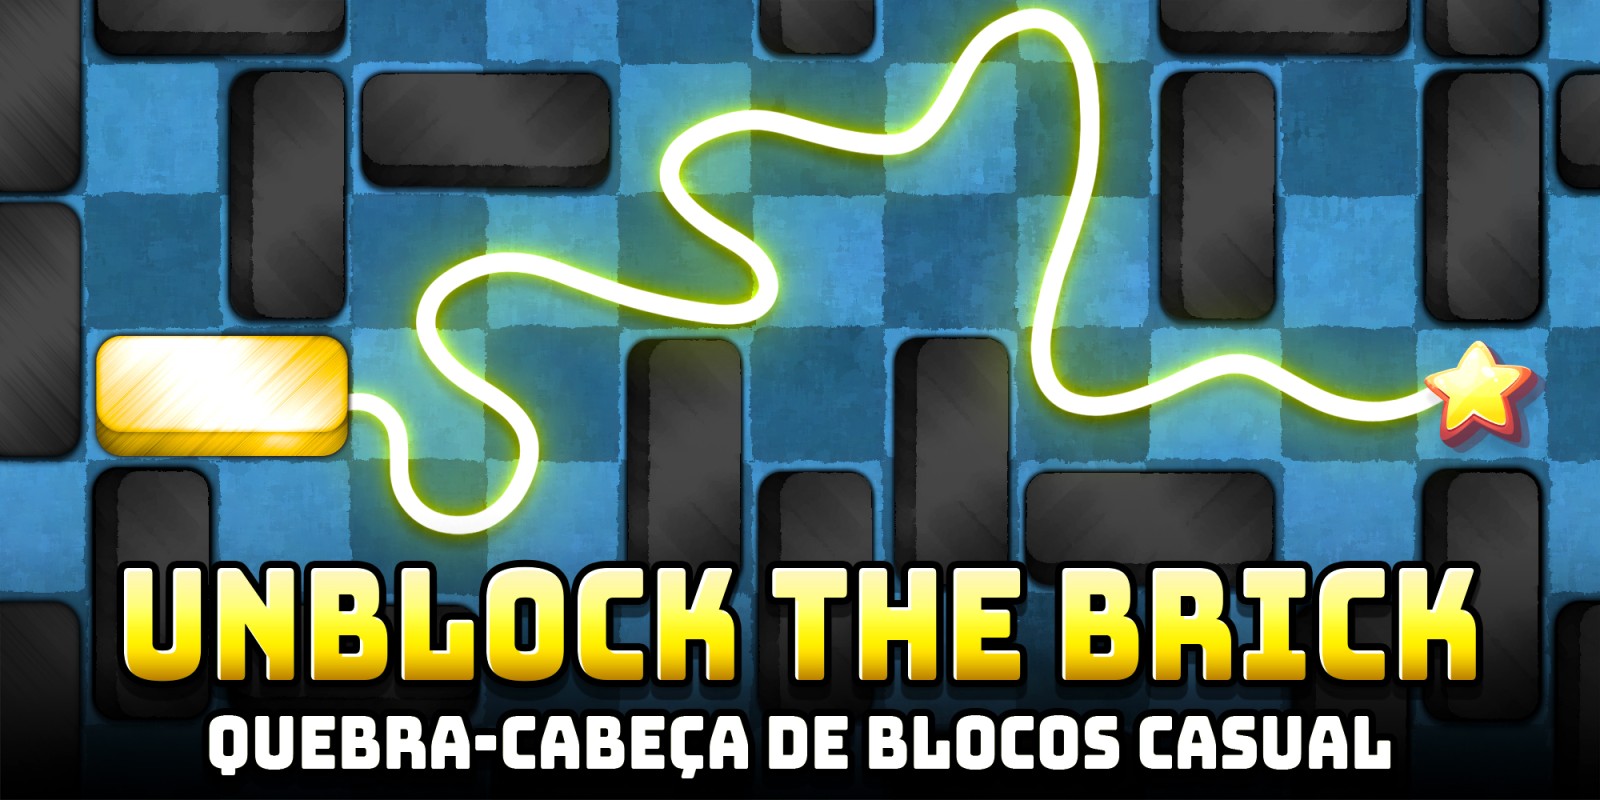 Unblock The Brick: Quebra-cabeça de blocos casual